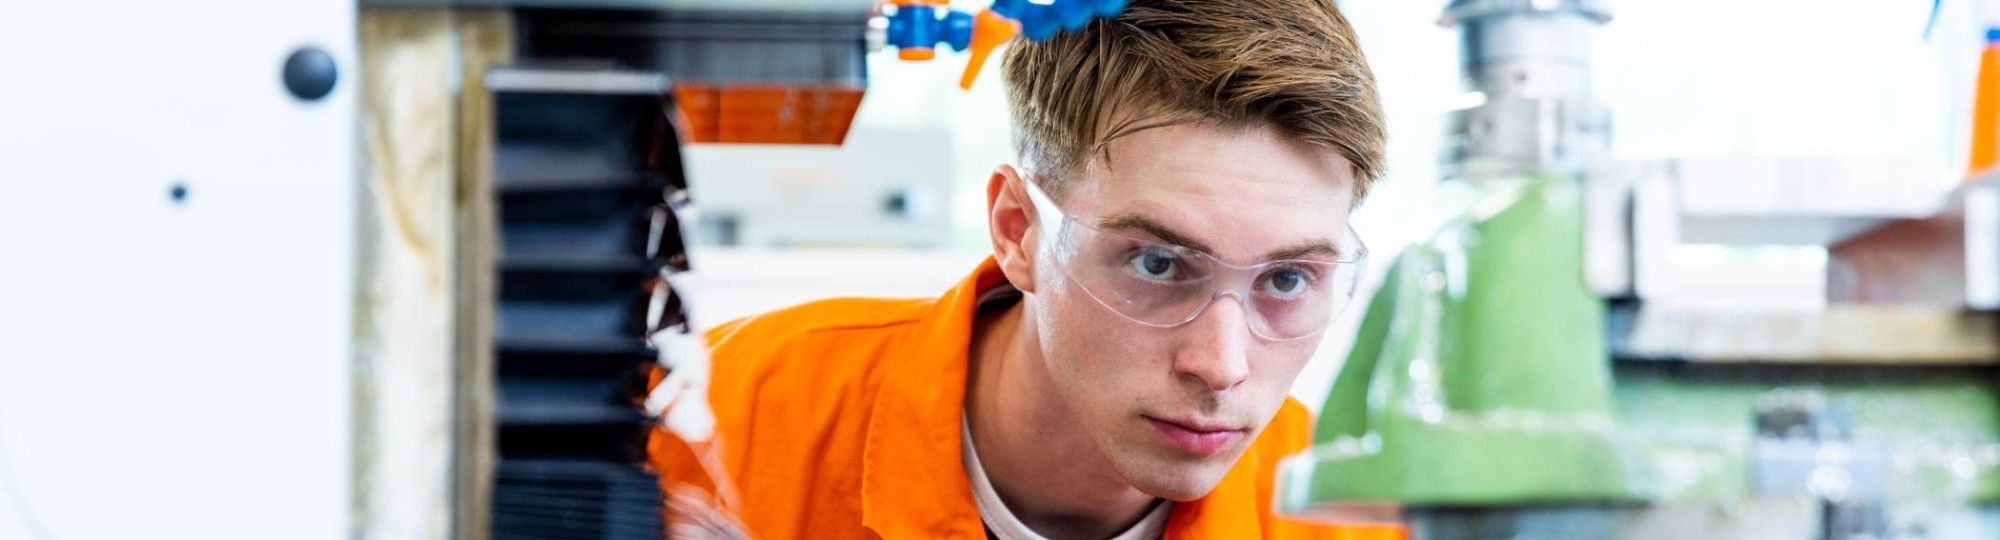 Mechanical Engineering - Werktuigbouwkunde - student behind milling machine